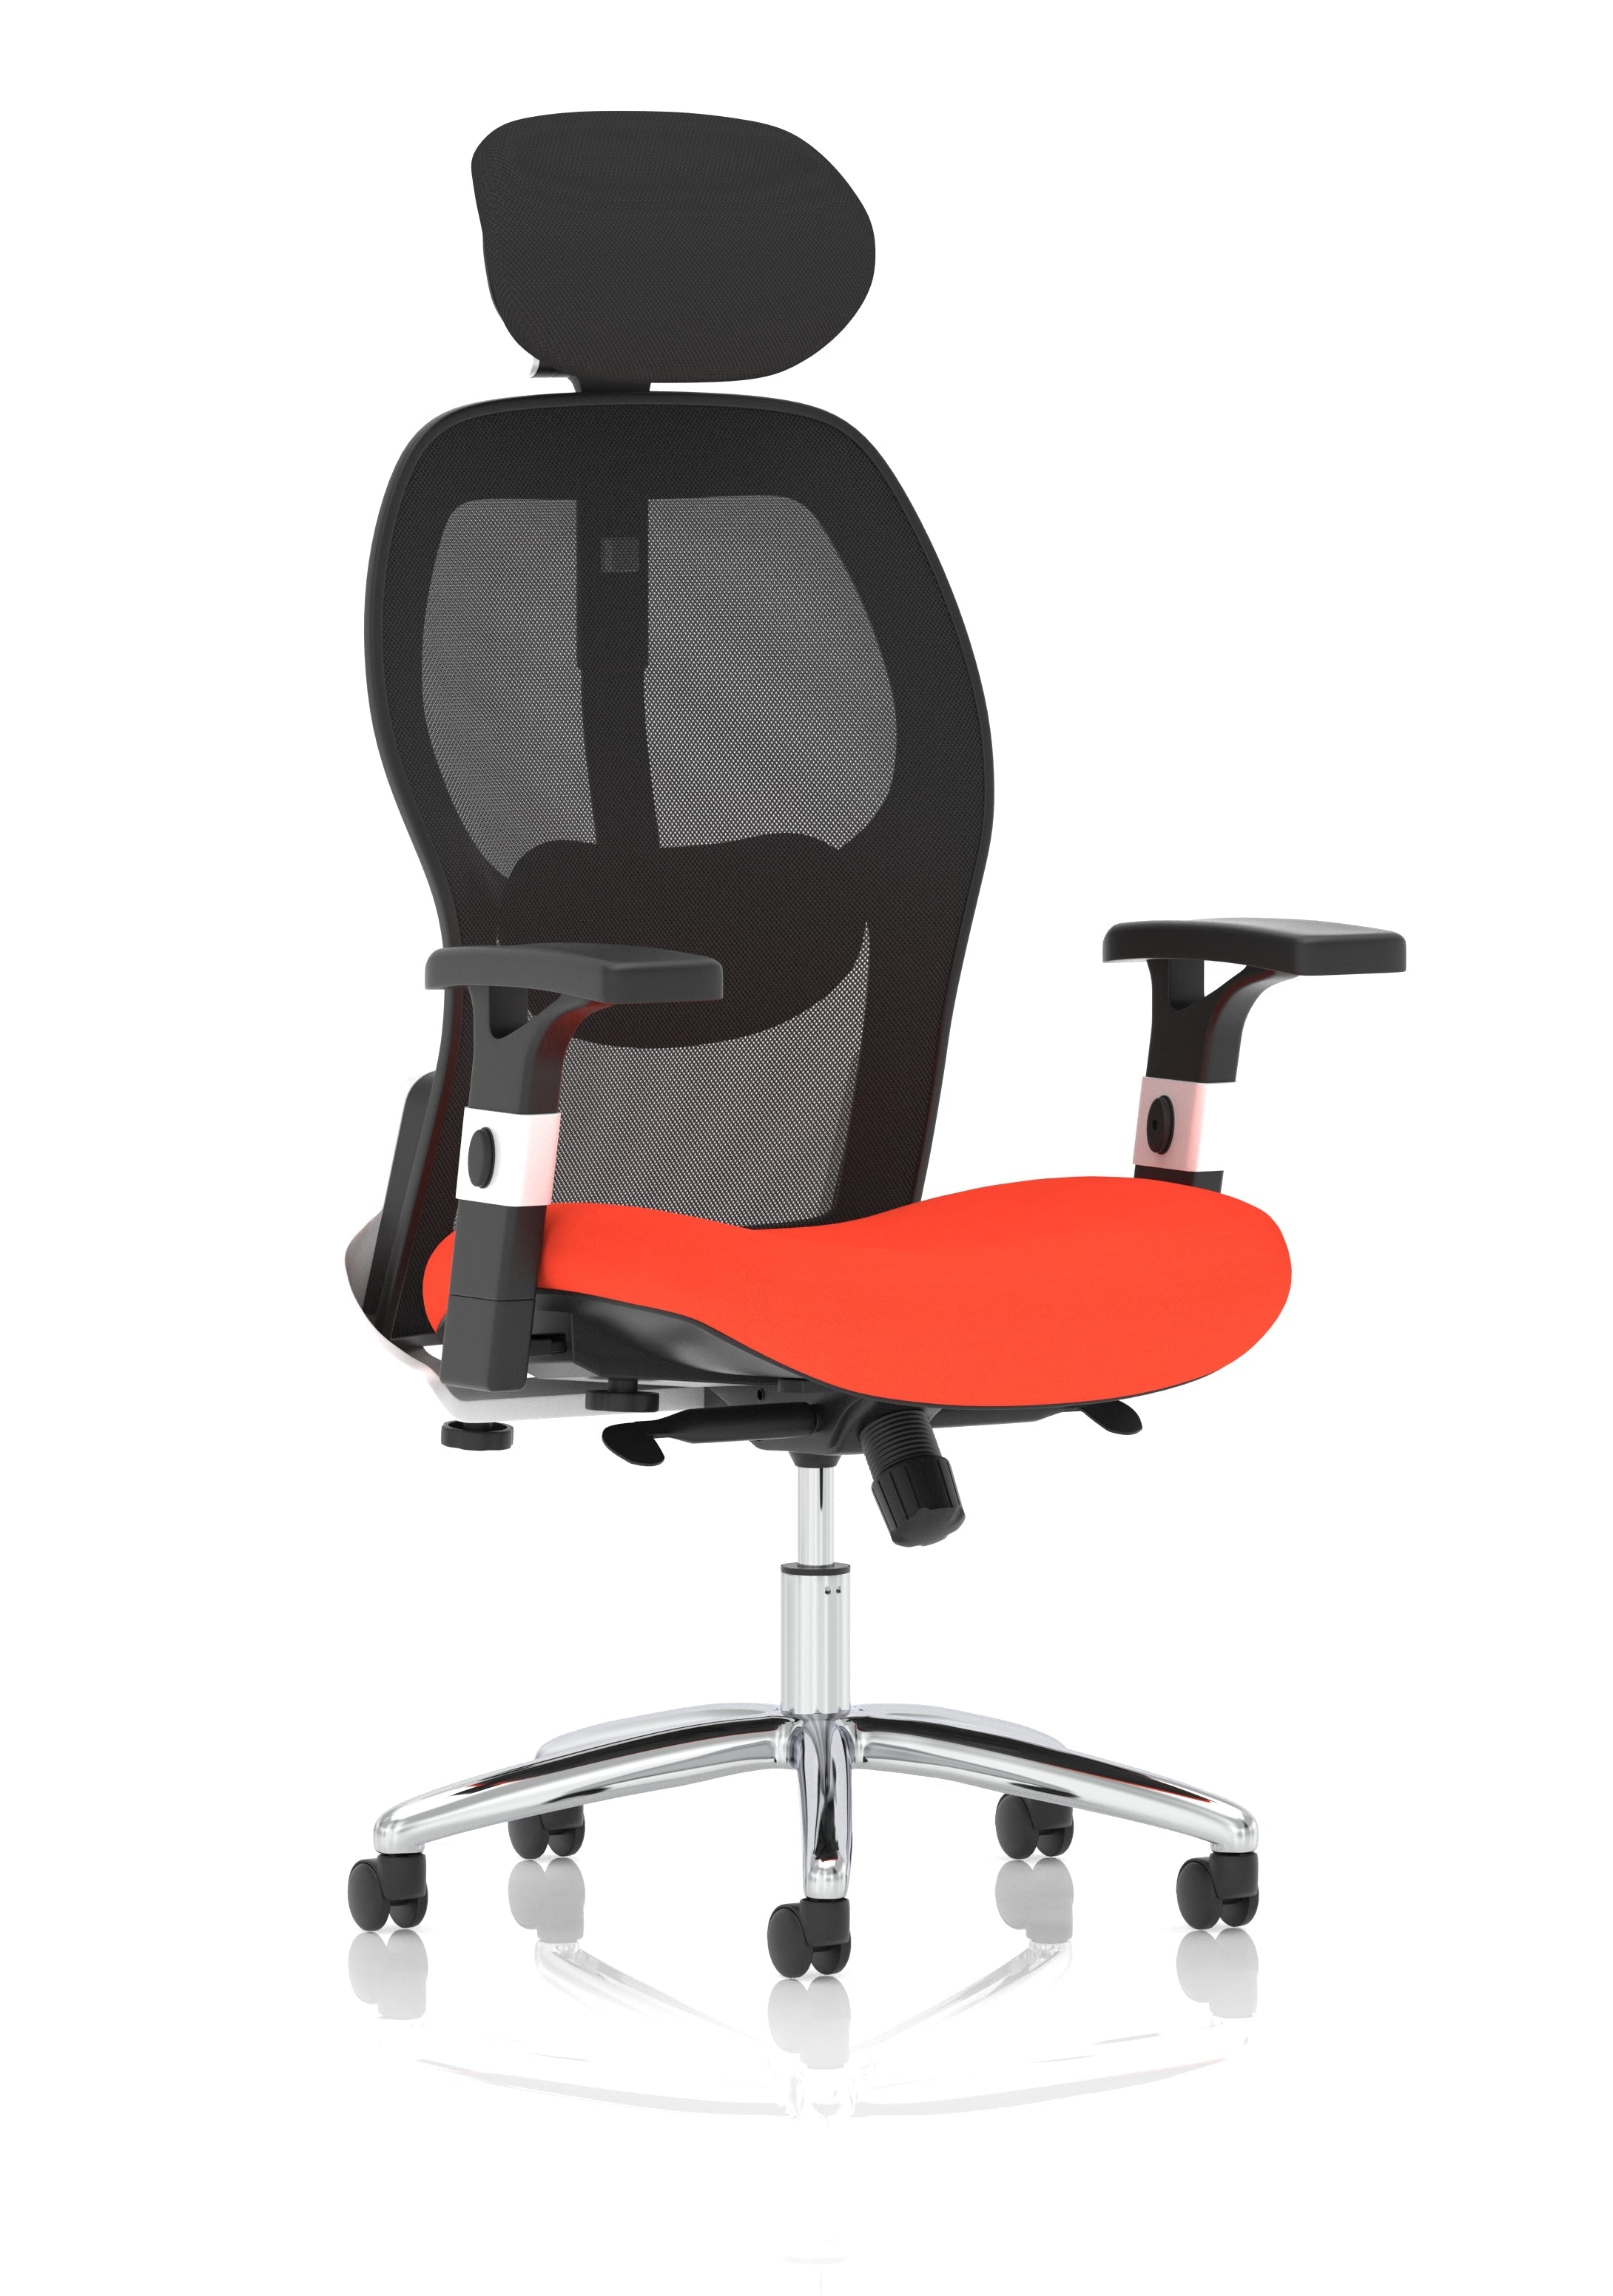 Sanderson II Black Fabric Mesh Back Chair